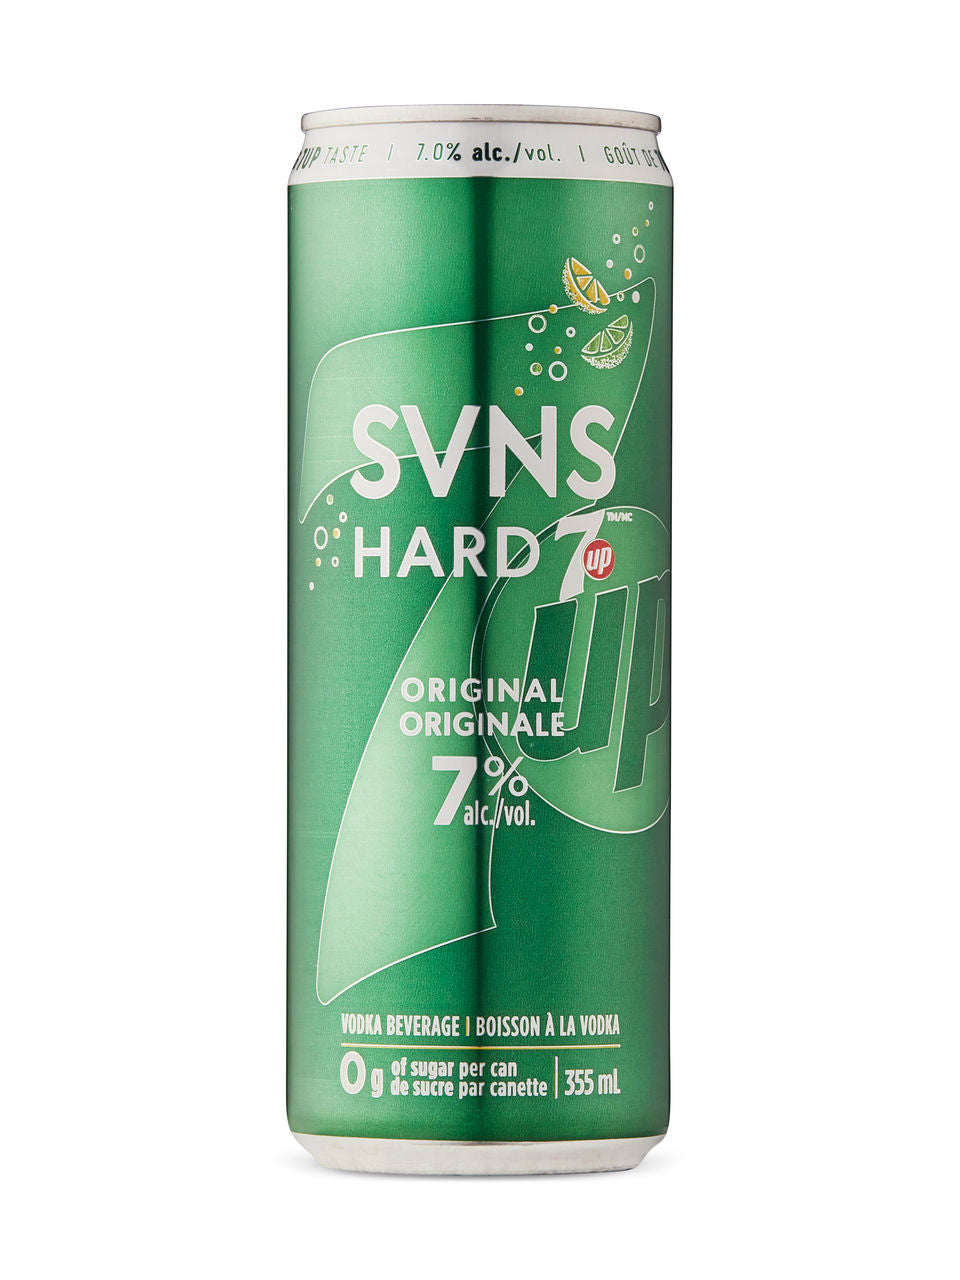 SVNS Hard 7UP Original 355 ml can